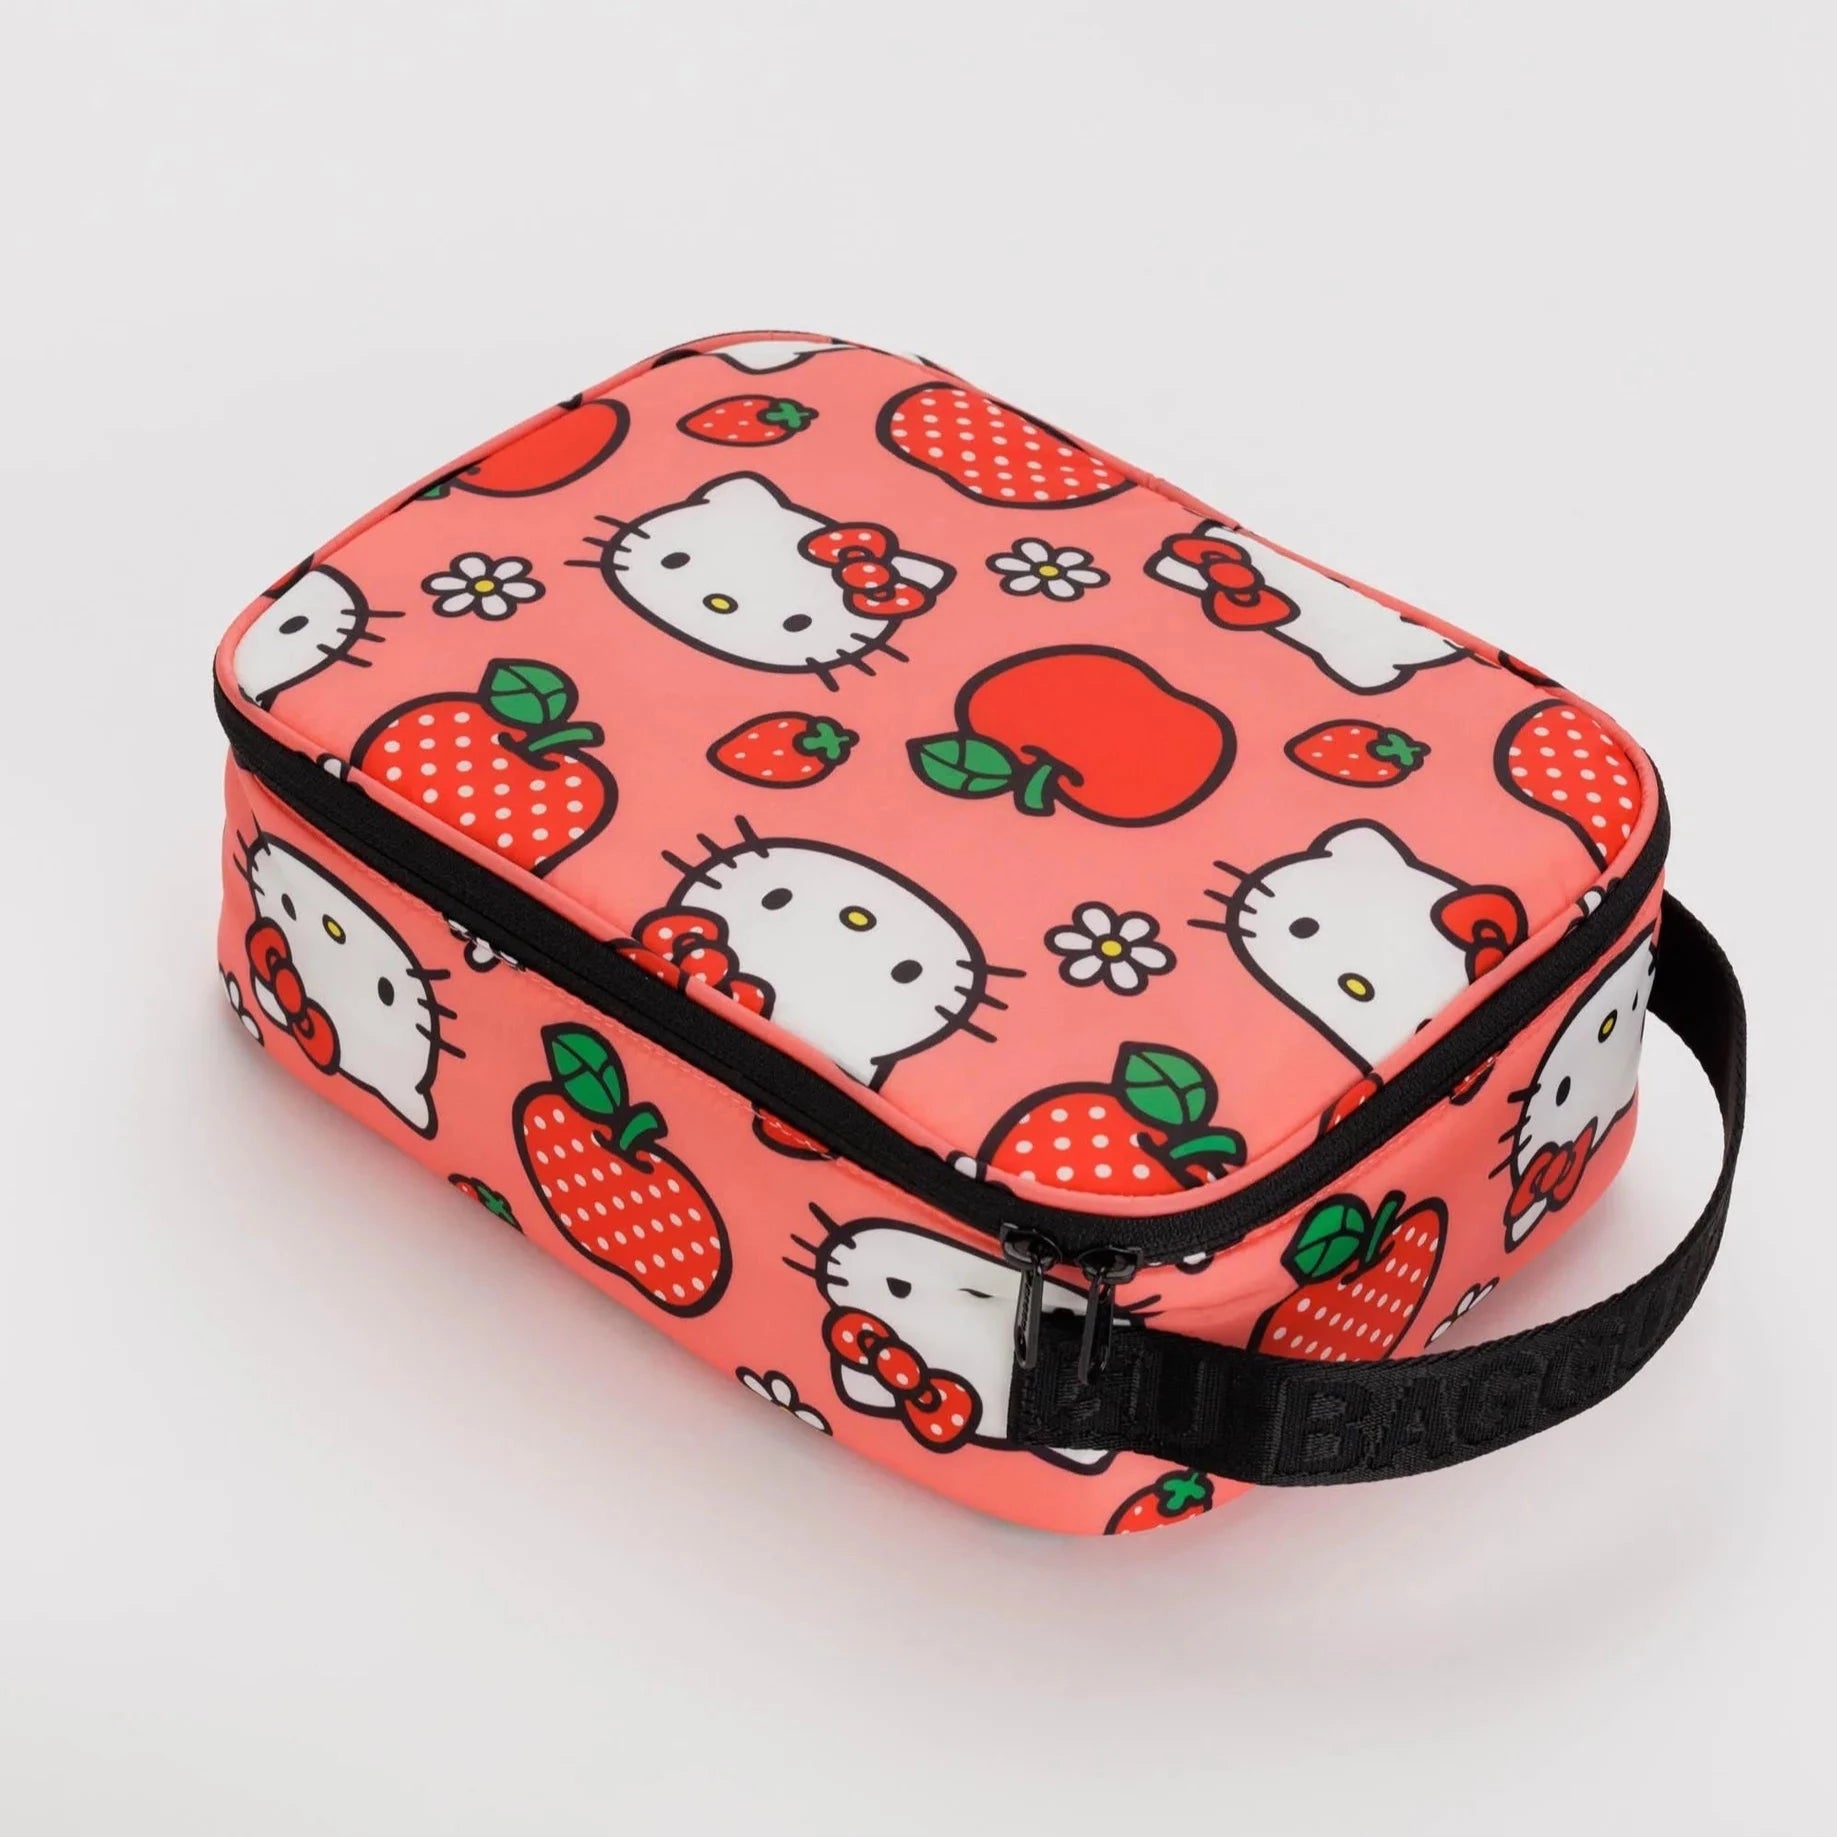 Preorder Baggu Hello Kitty Apple Lunch Box